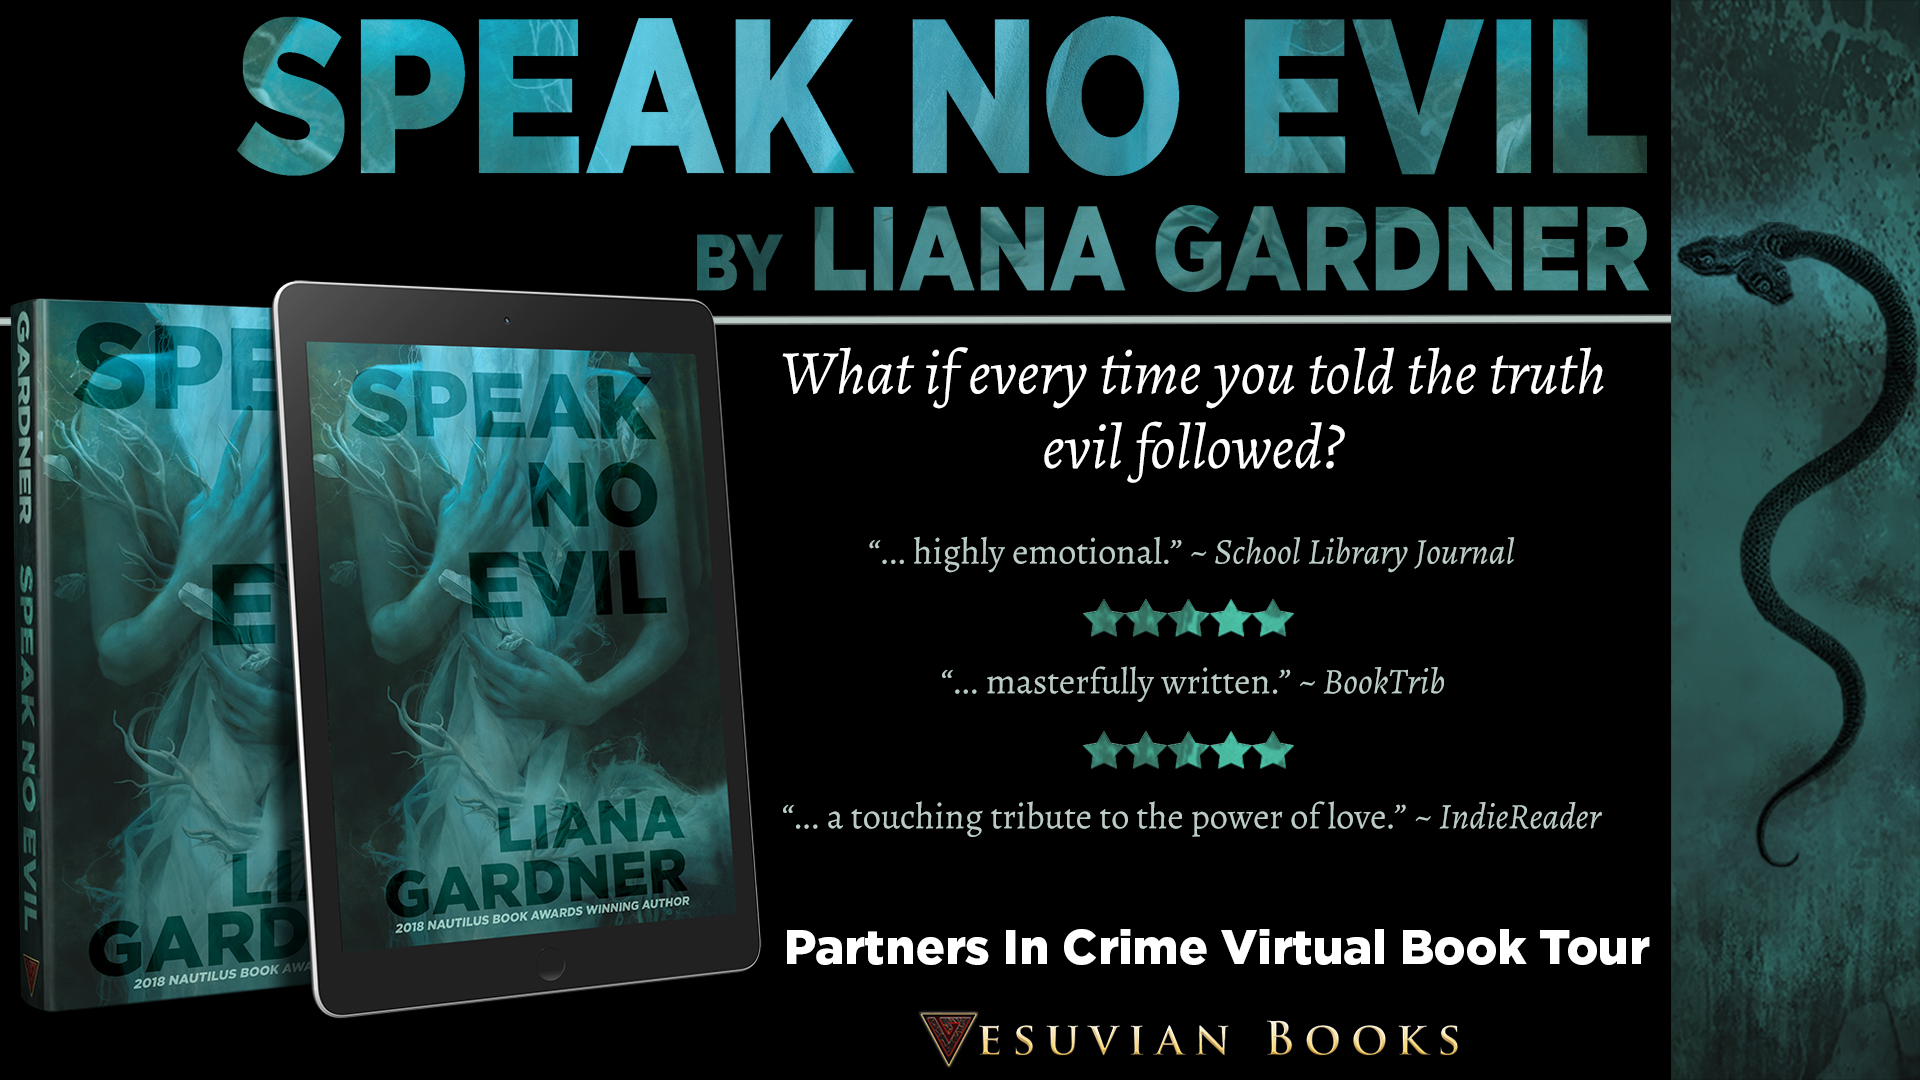 Speak No Evil by Liana Gardner